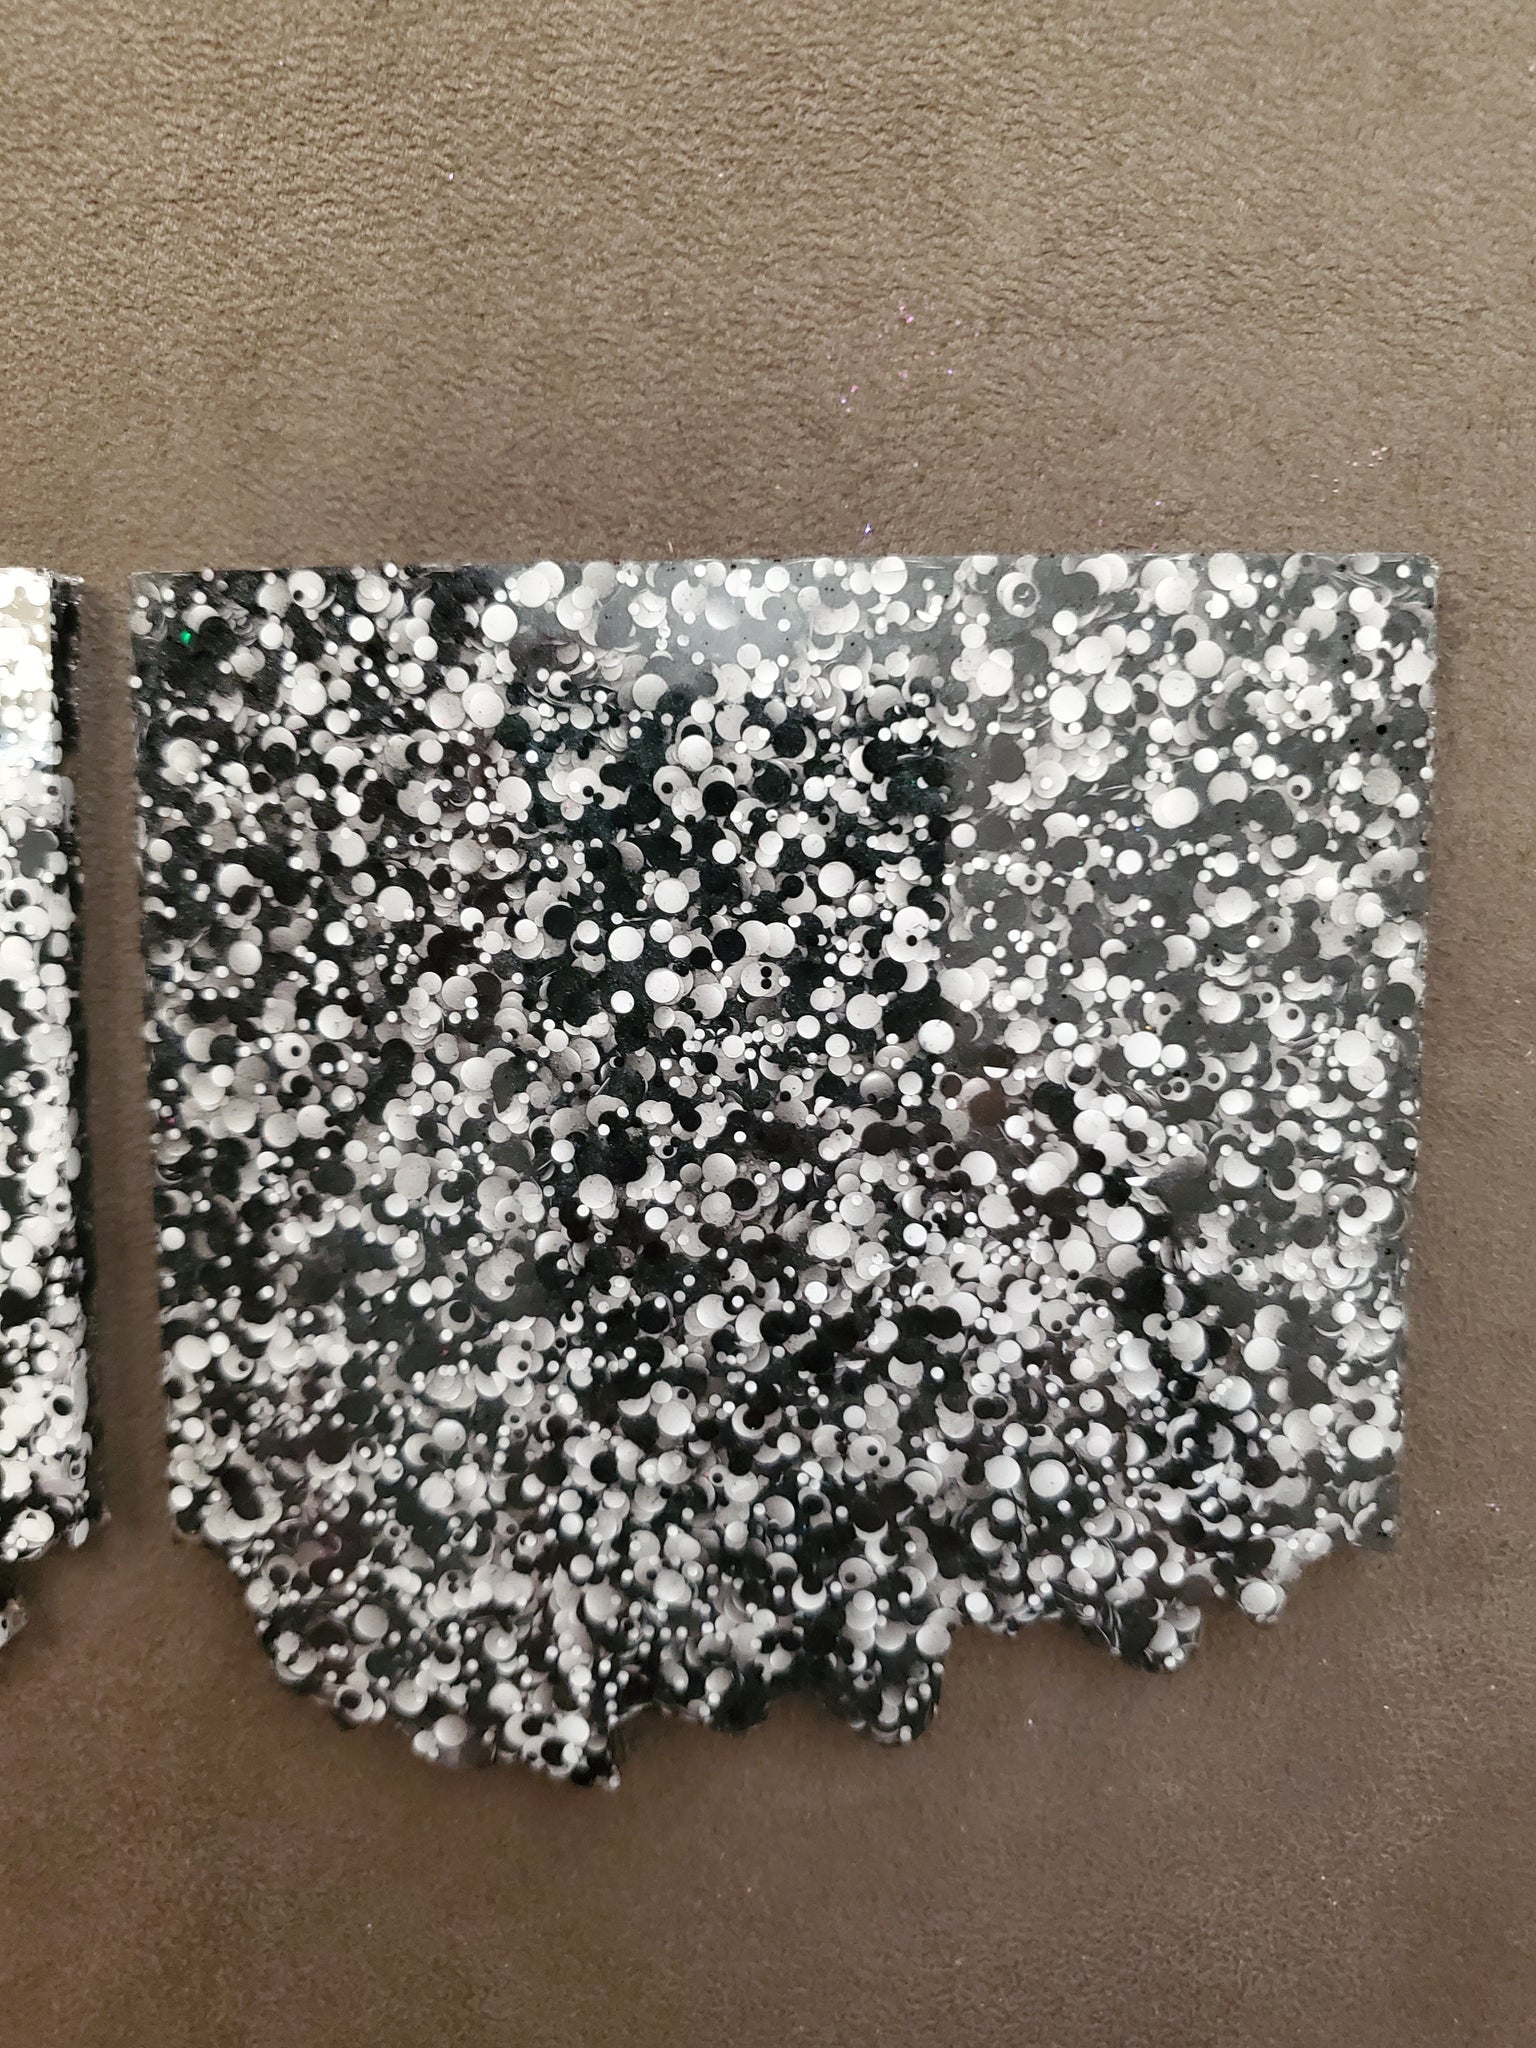 Handmade Resin Speckled Black/White 2pack Coasters